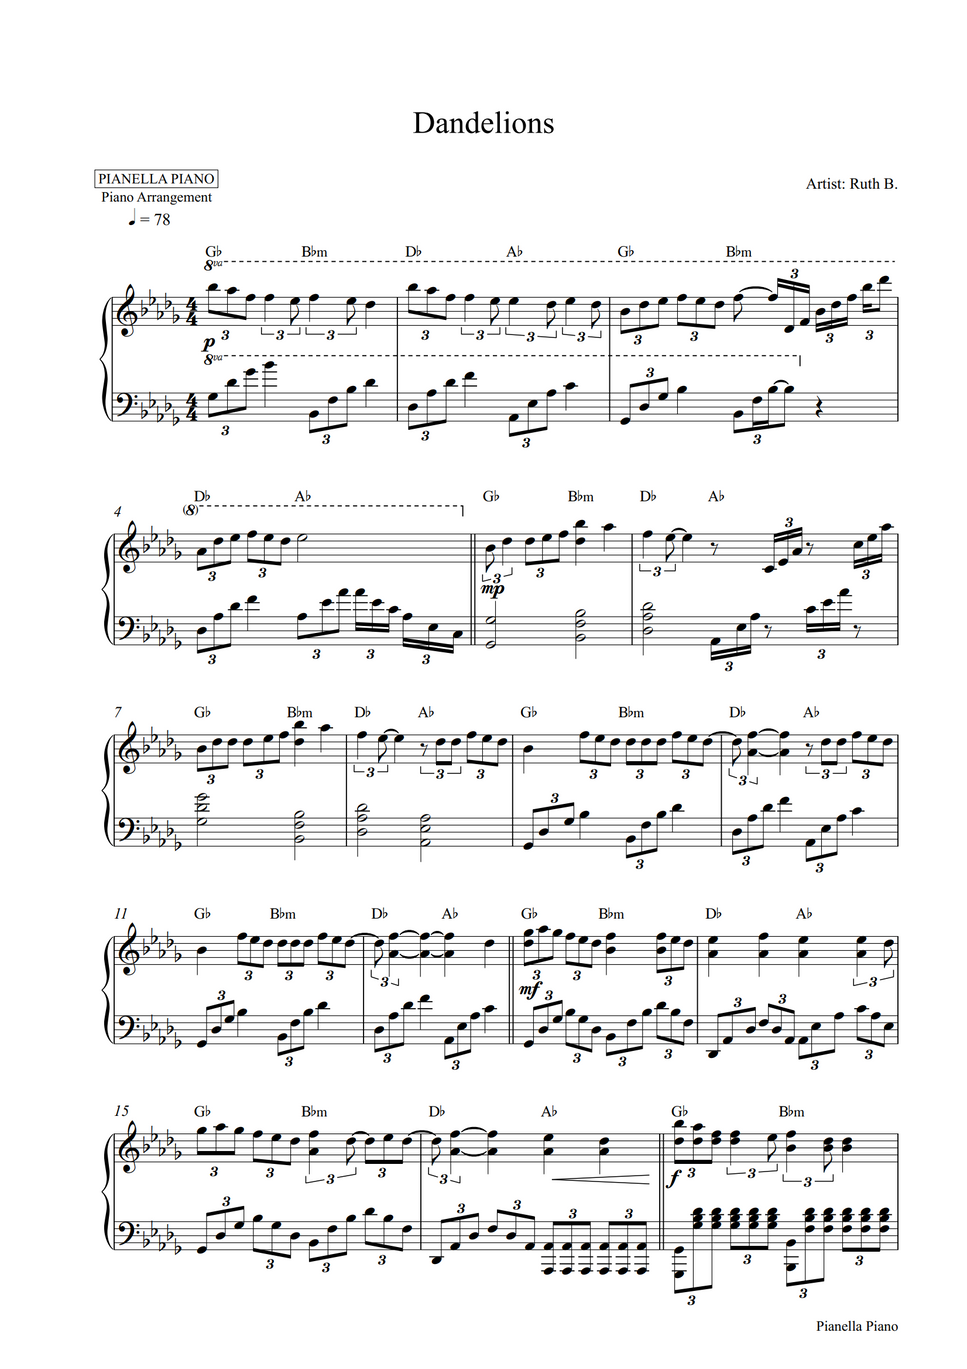 Ruth B Dandelions Piano Sheet Get 2 Pdf In Original Key Db Major And Easier Key C Major By 